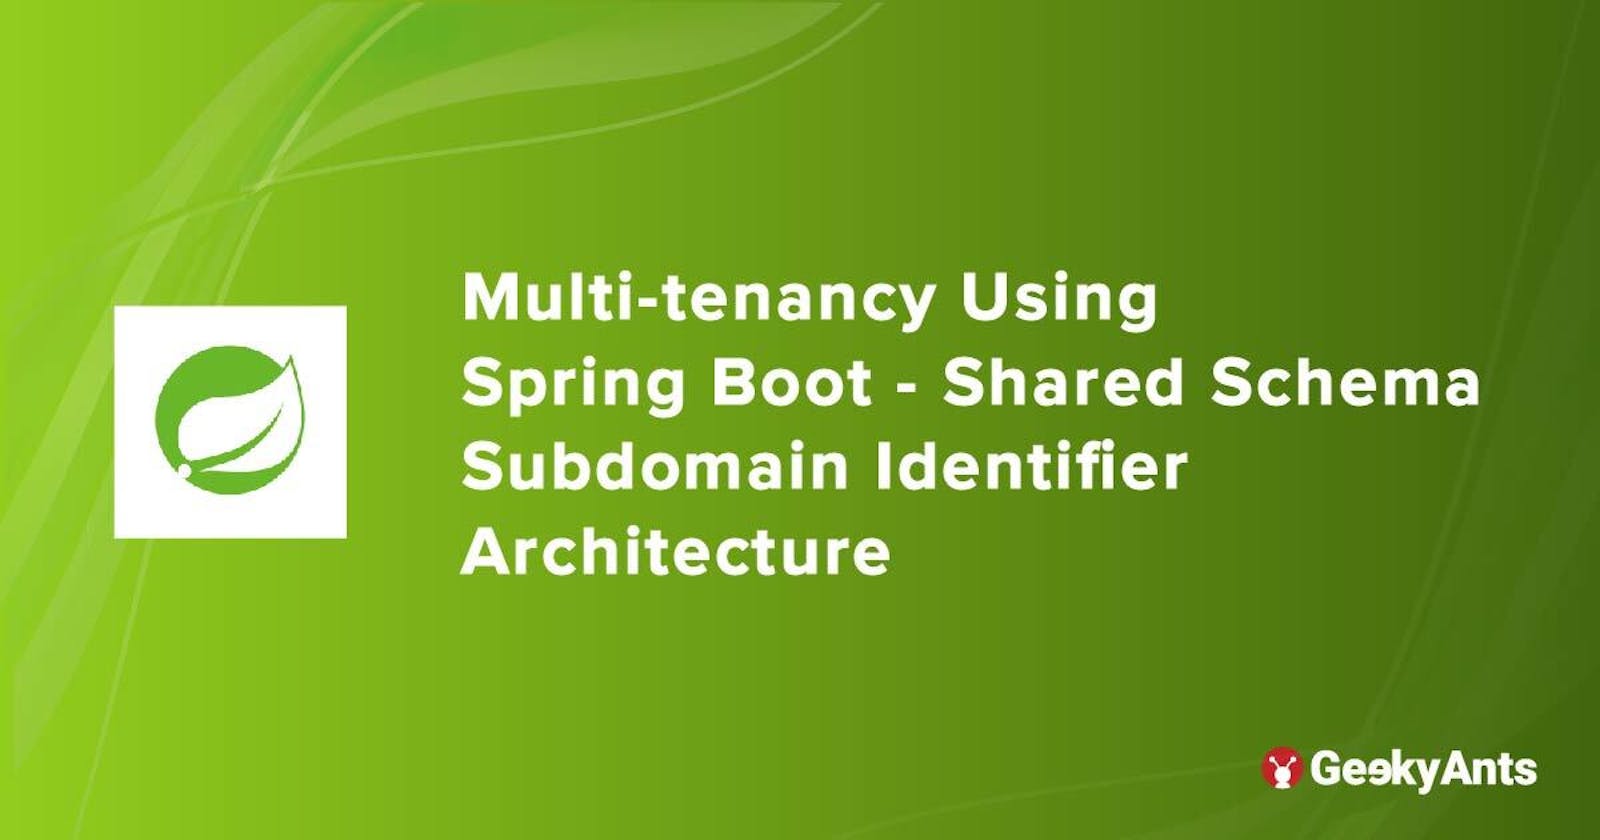 Multi-tenancy Using Spring Boot - Shared Schema Subdomain Identifier Architecture